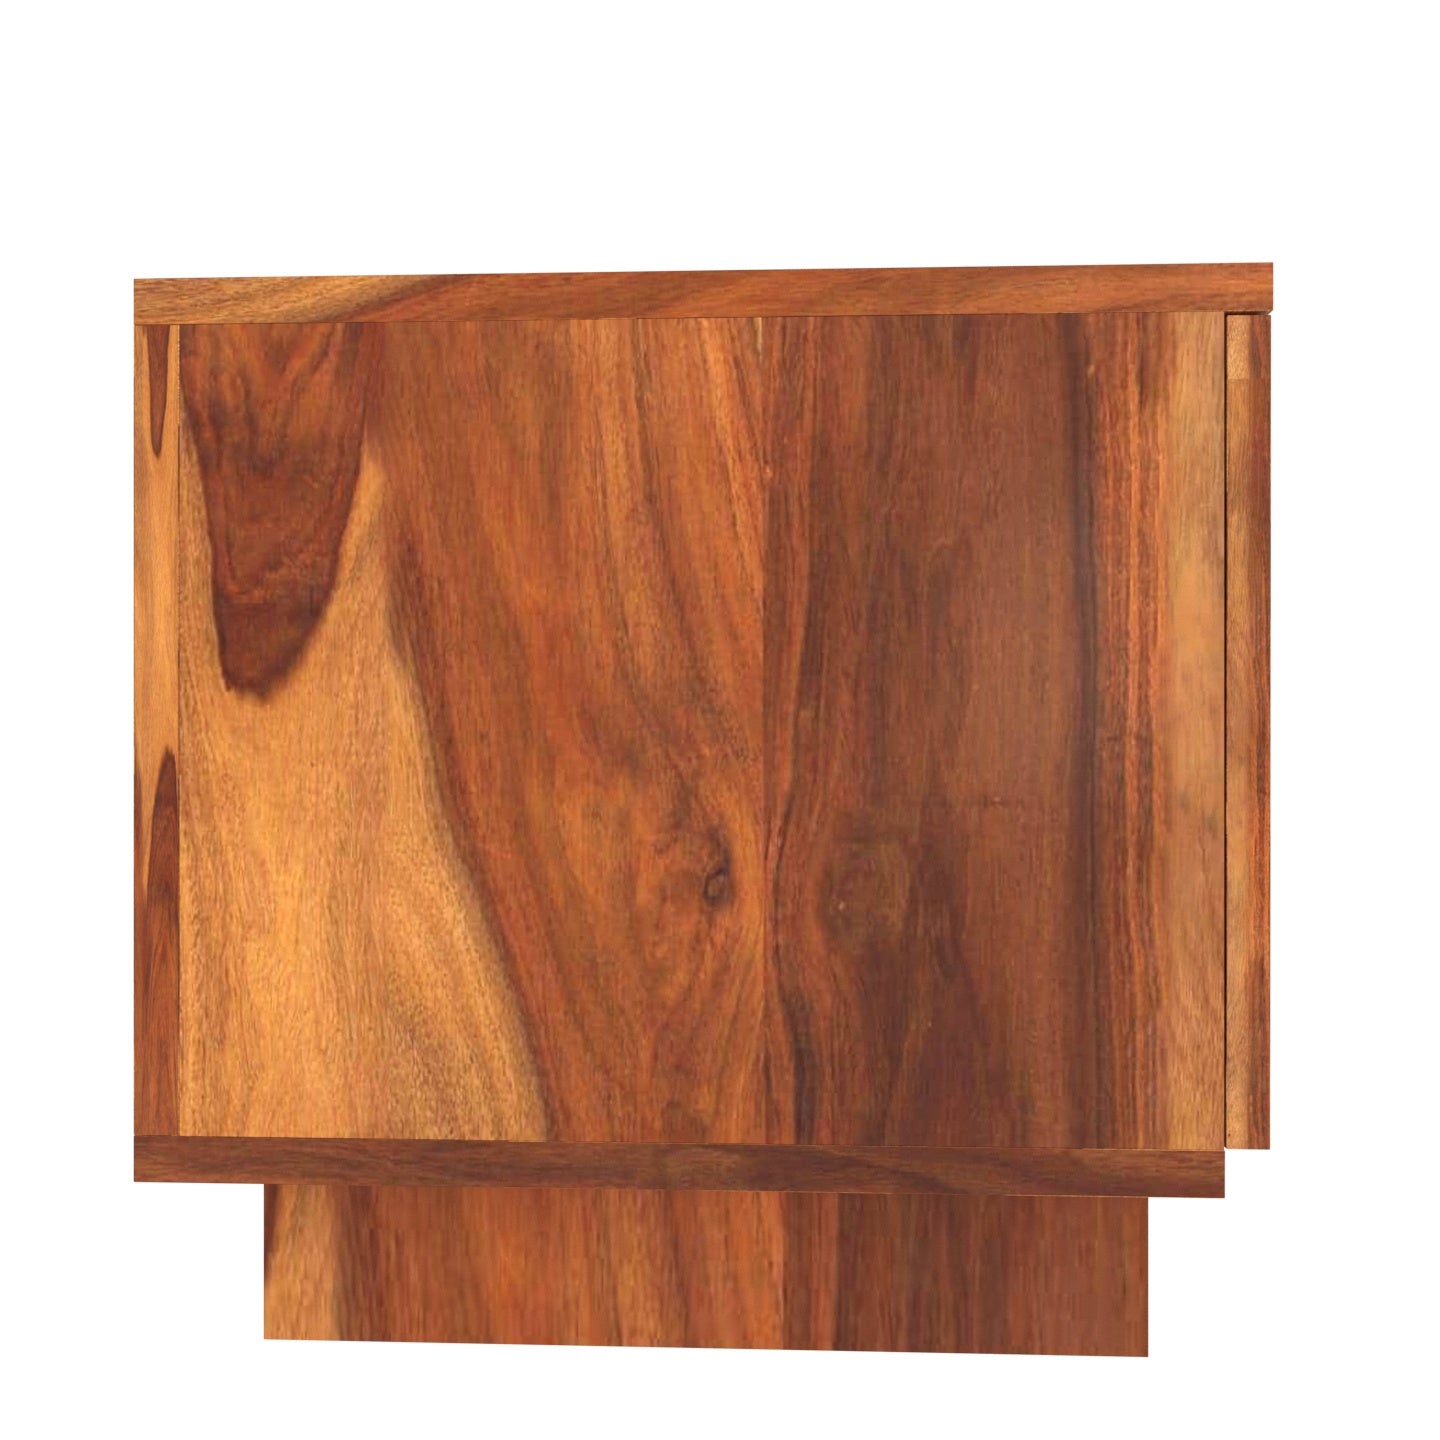 Sheesham Multiple Storage Handmade Wooden Coffee Table Coffee Table